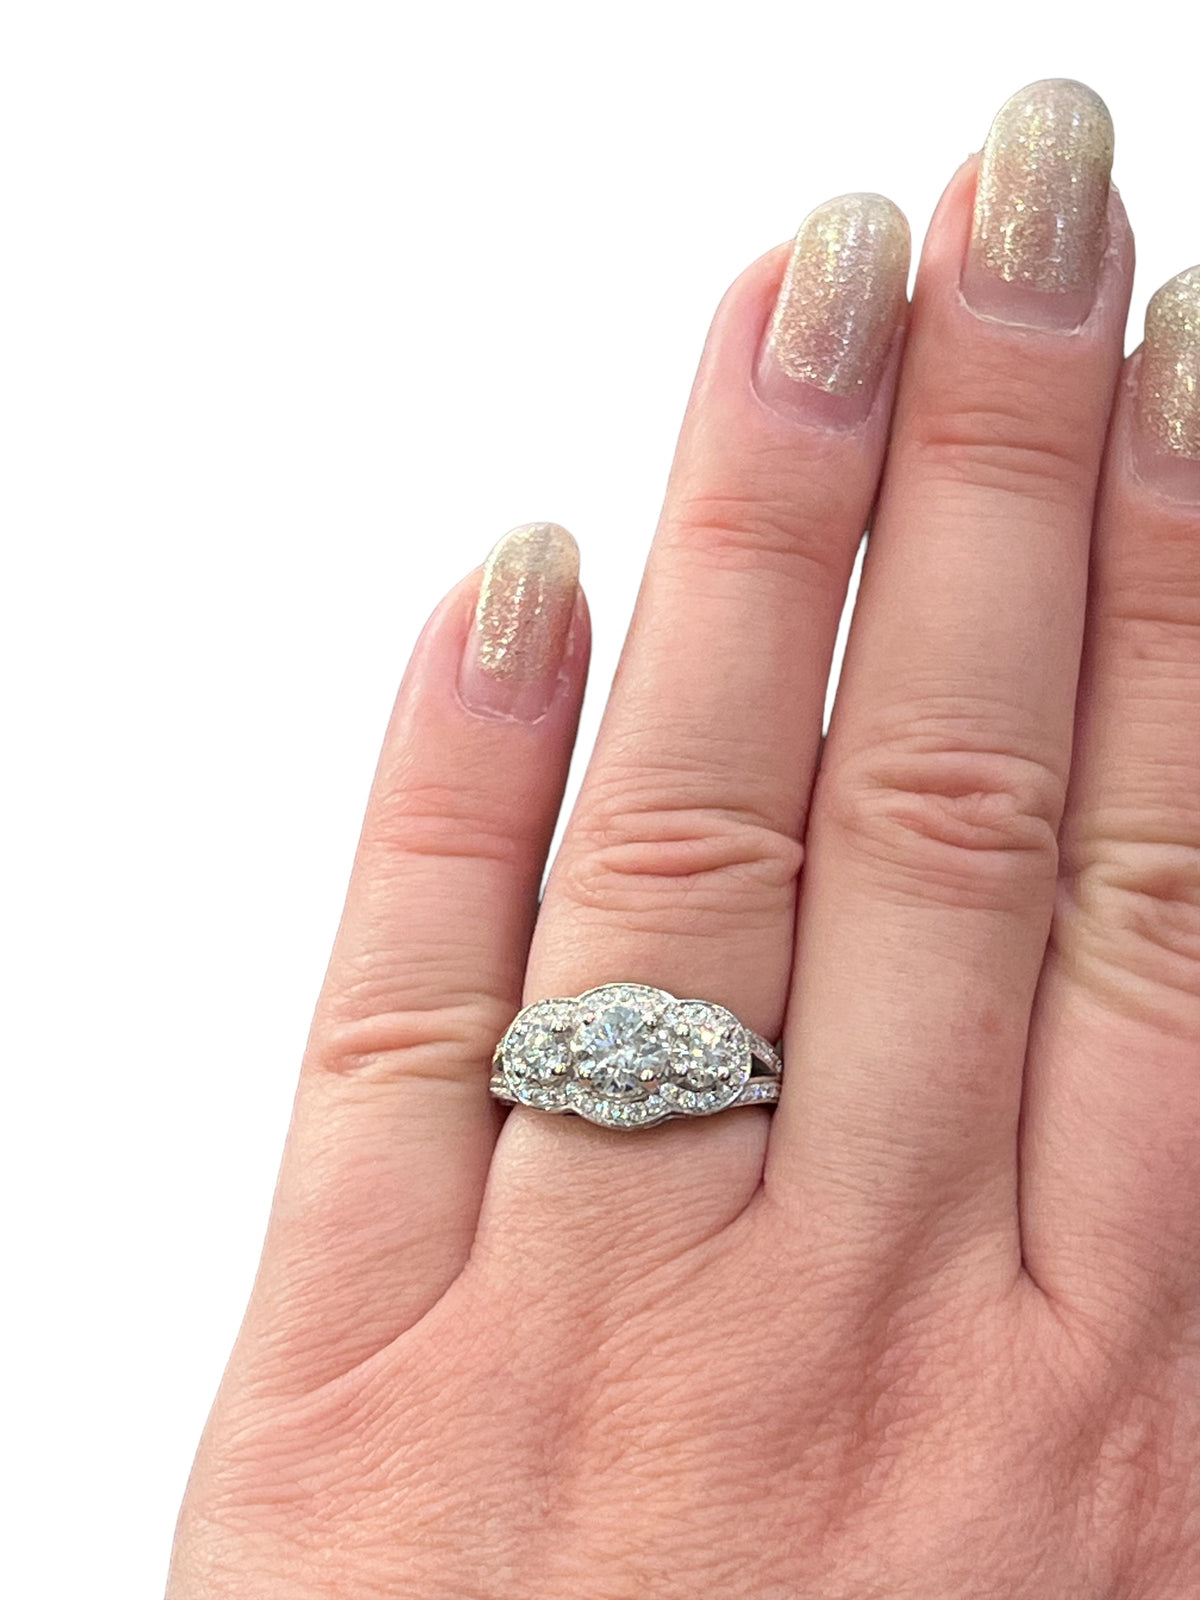 14K White Gold 2.52cttw Diamond Halo Engagement Ring, Size 6.5